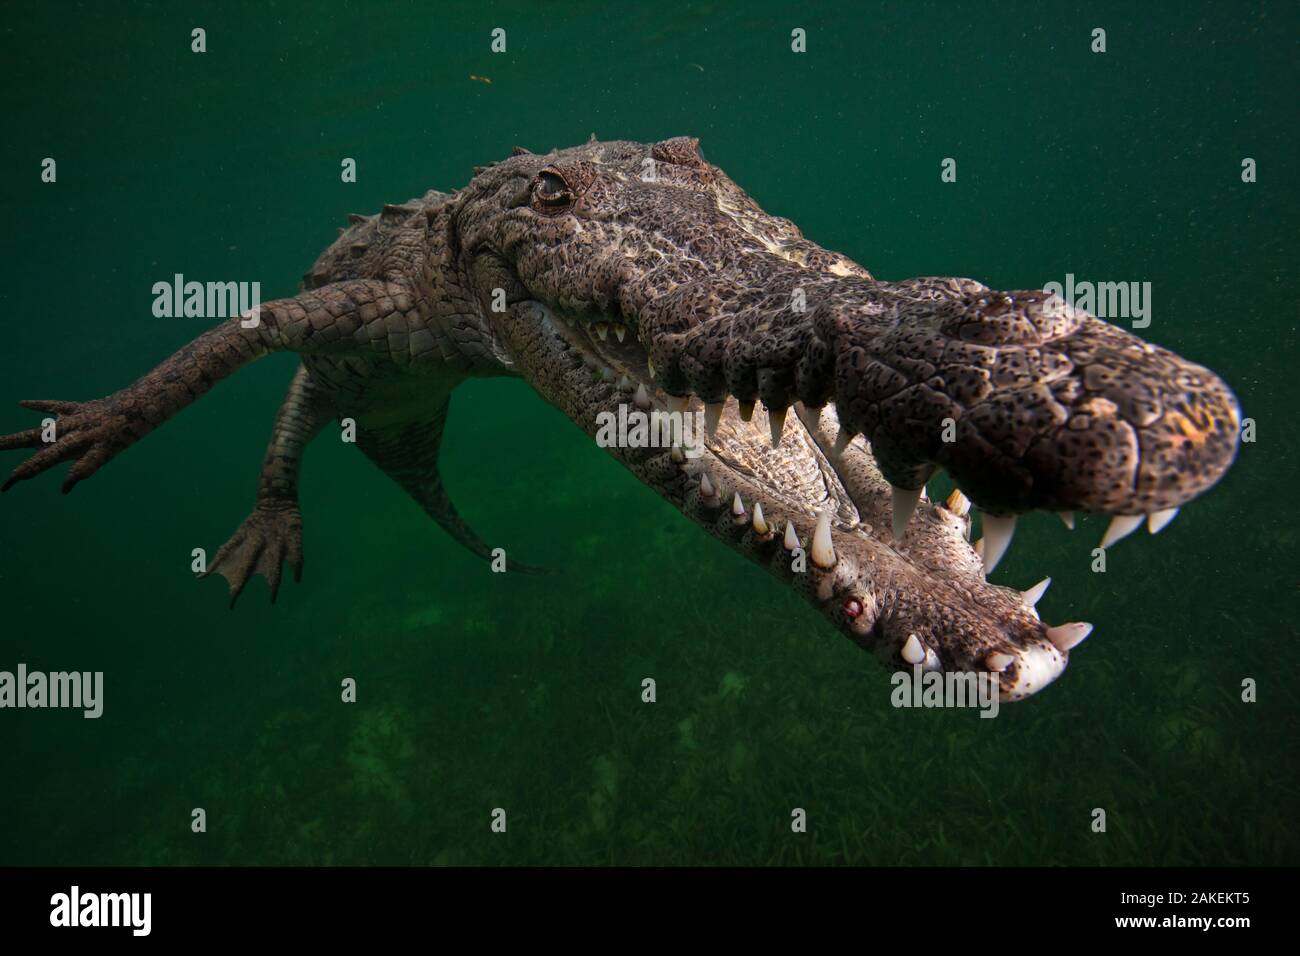 American crocodile (Crocodylus acutus), underwater, Jardines de la Reina / Gardens of the Queen National Park, Caribbean Sea, Ciego de Avila, Cuba, January. Vulnerable species. Stock Photo